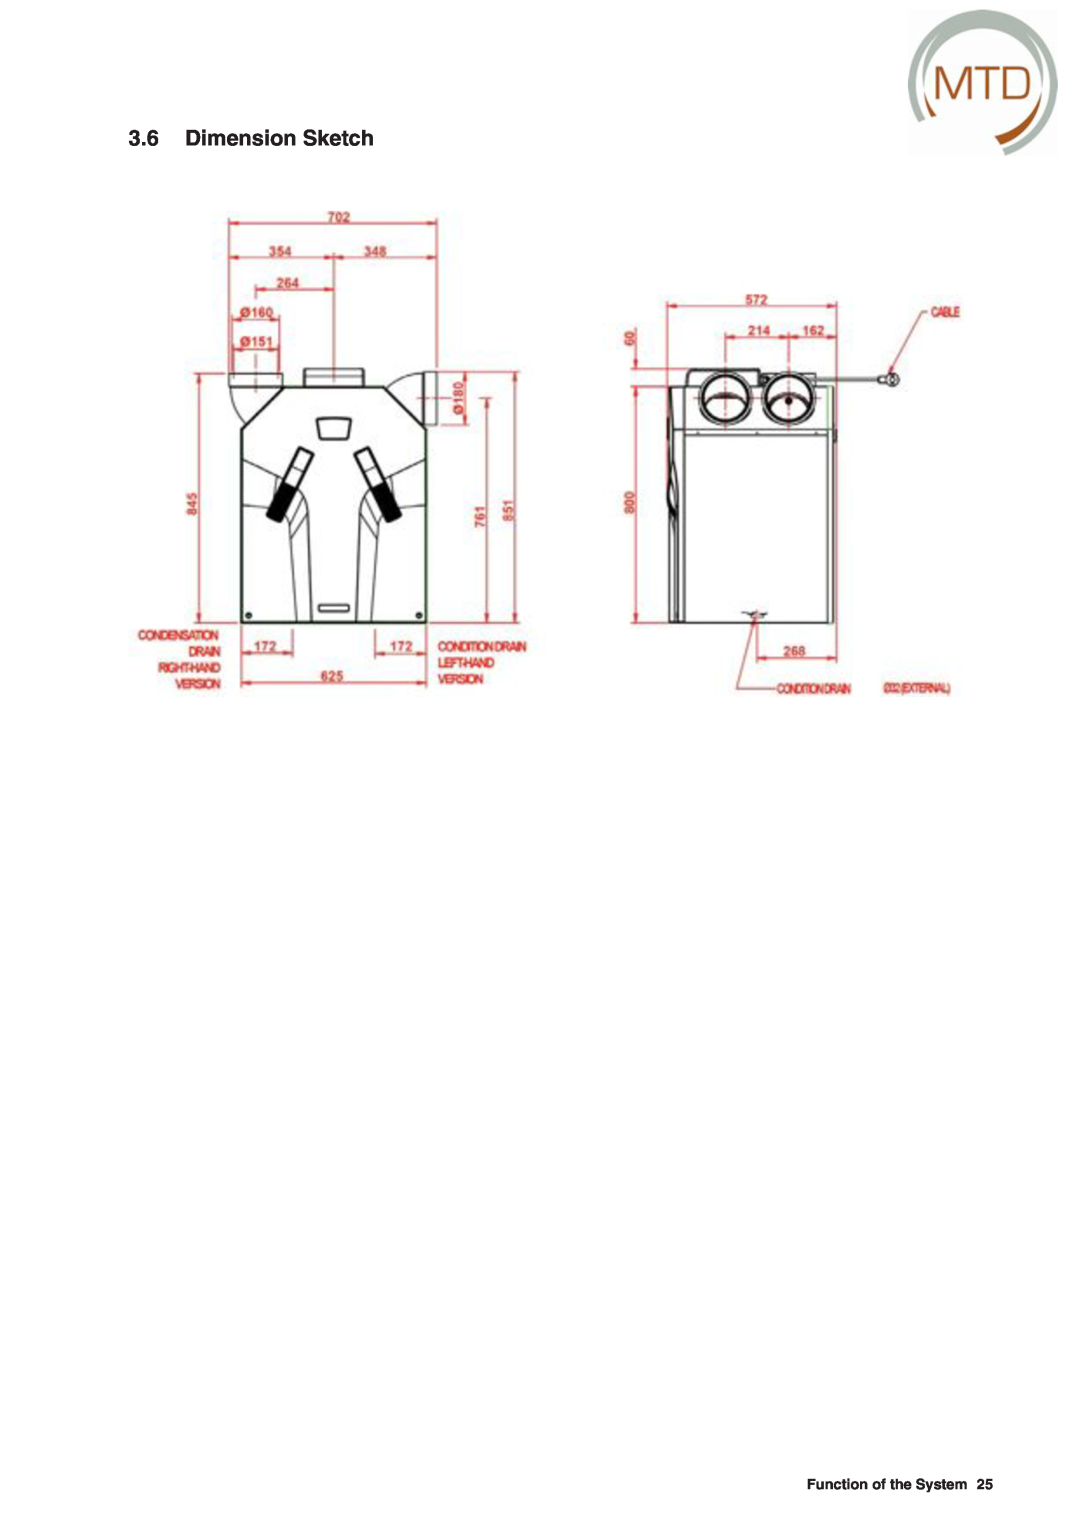 MTD ERV 350, ERV 365 manual Dimension Sketch, Function of the System 